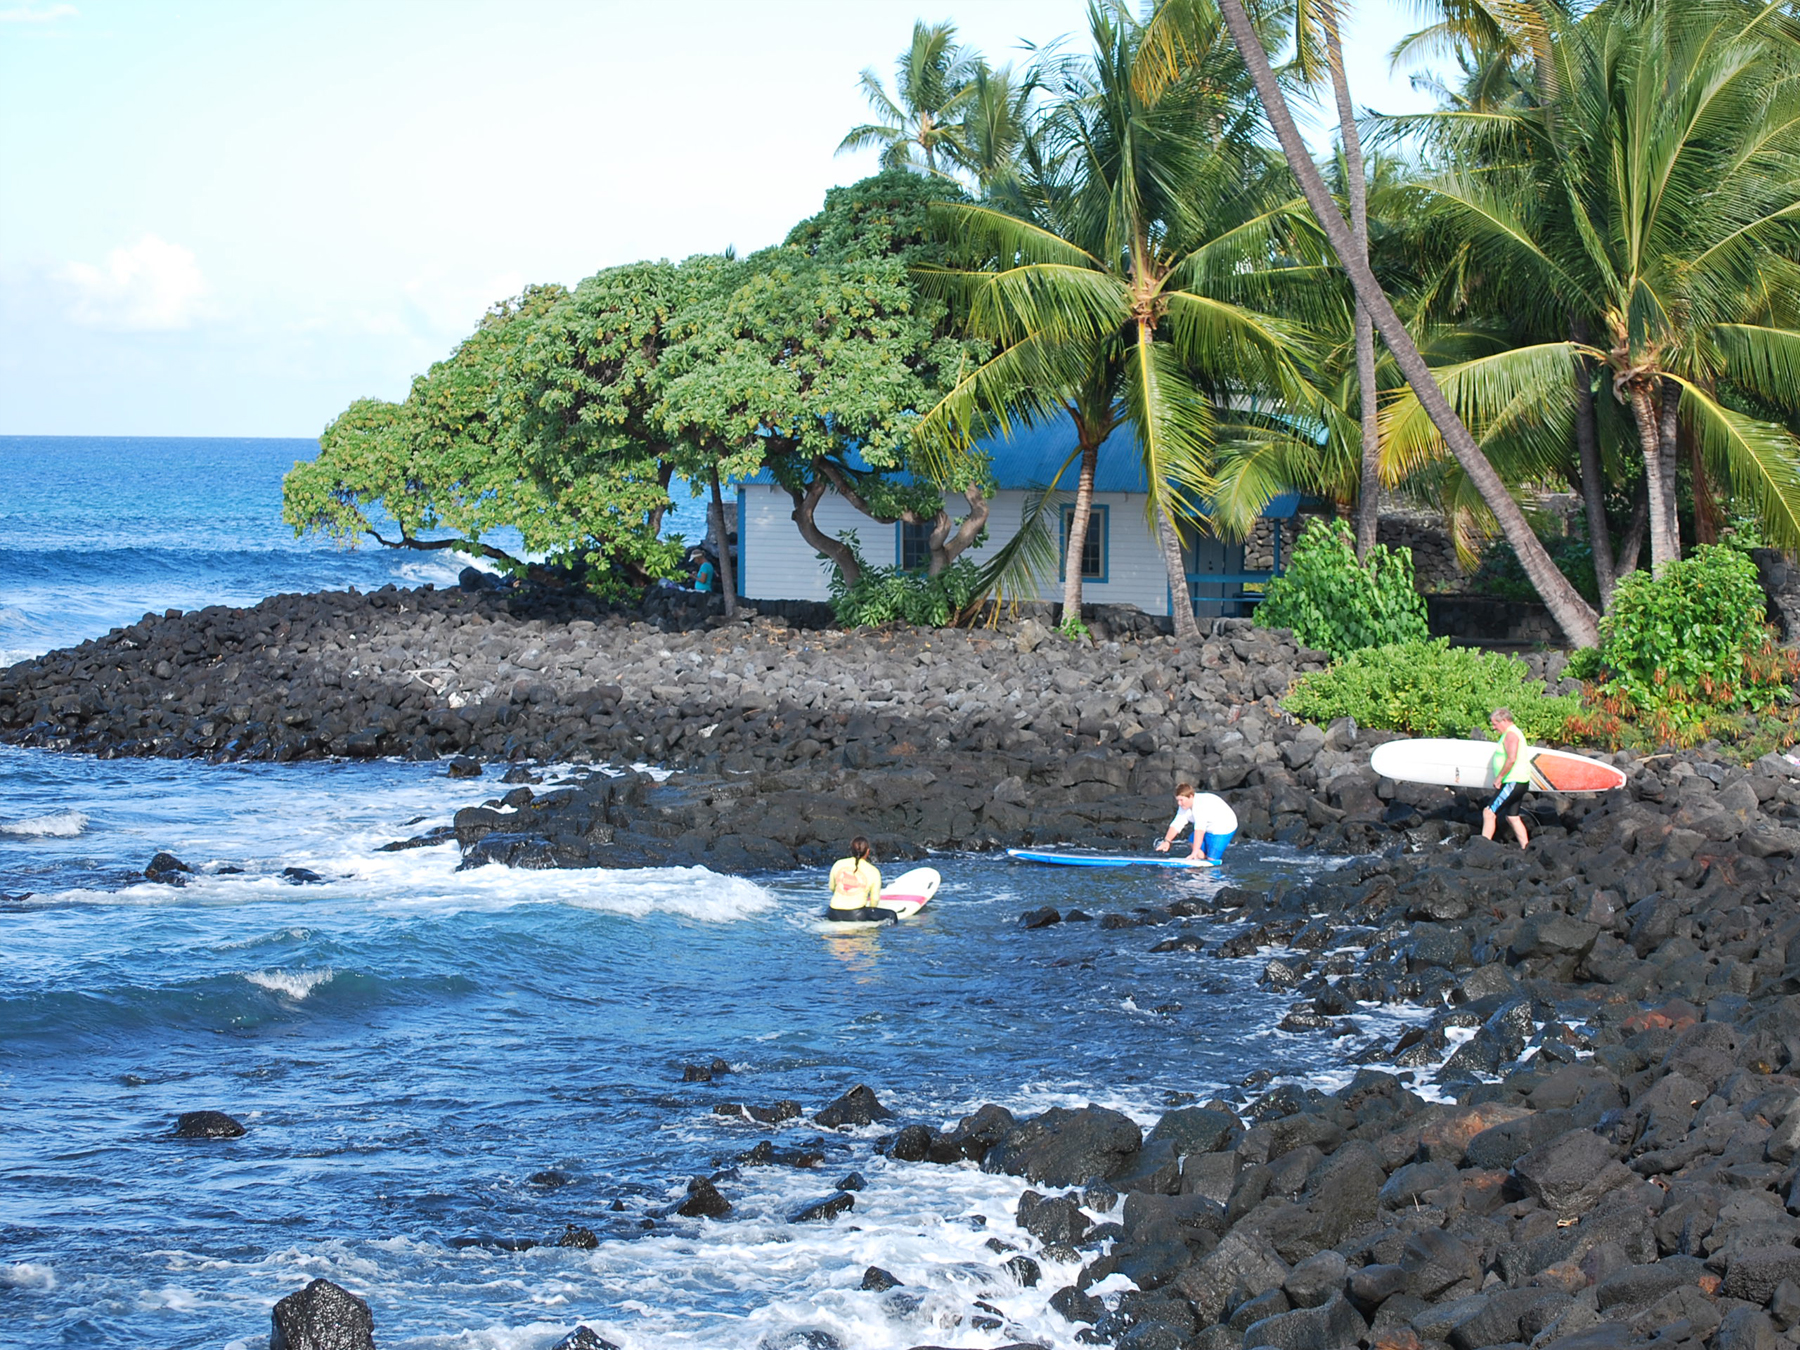 Kahaluu surfers entering the water